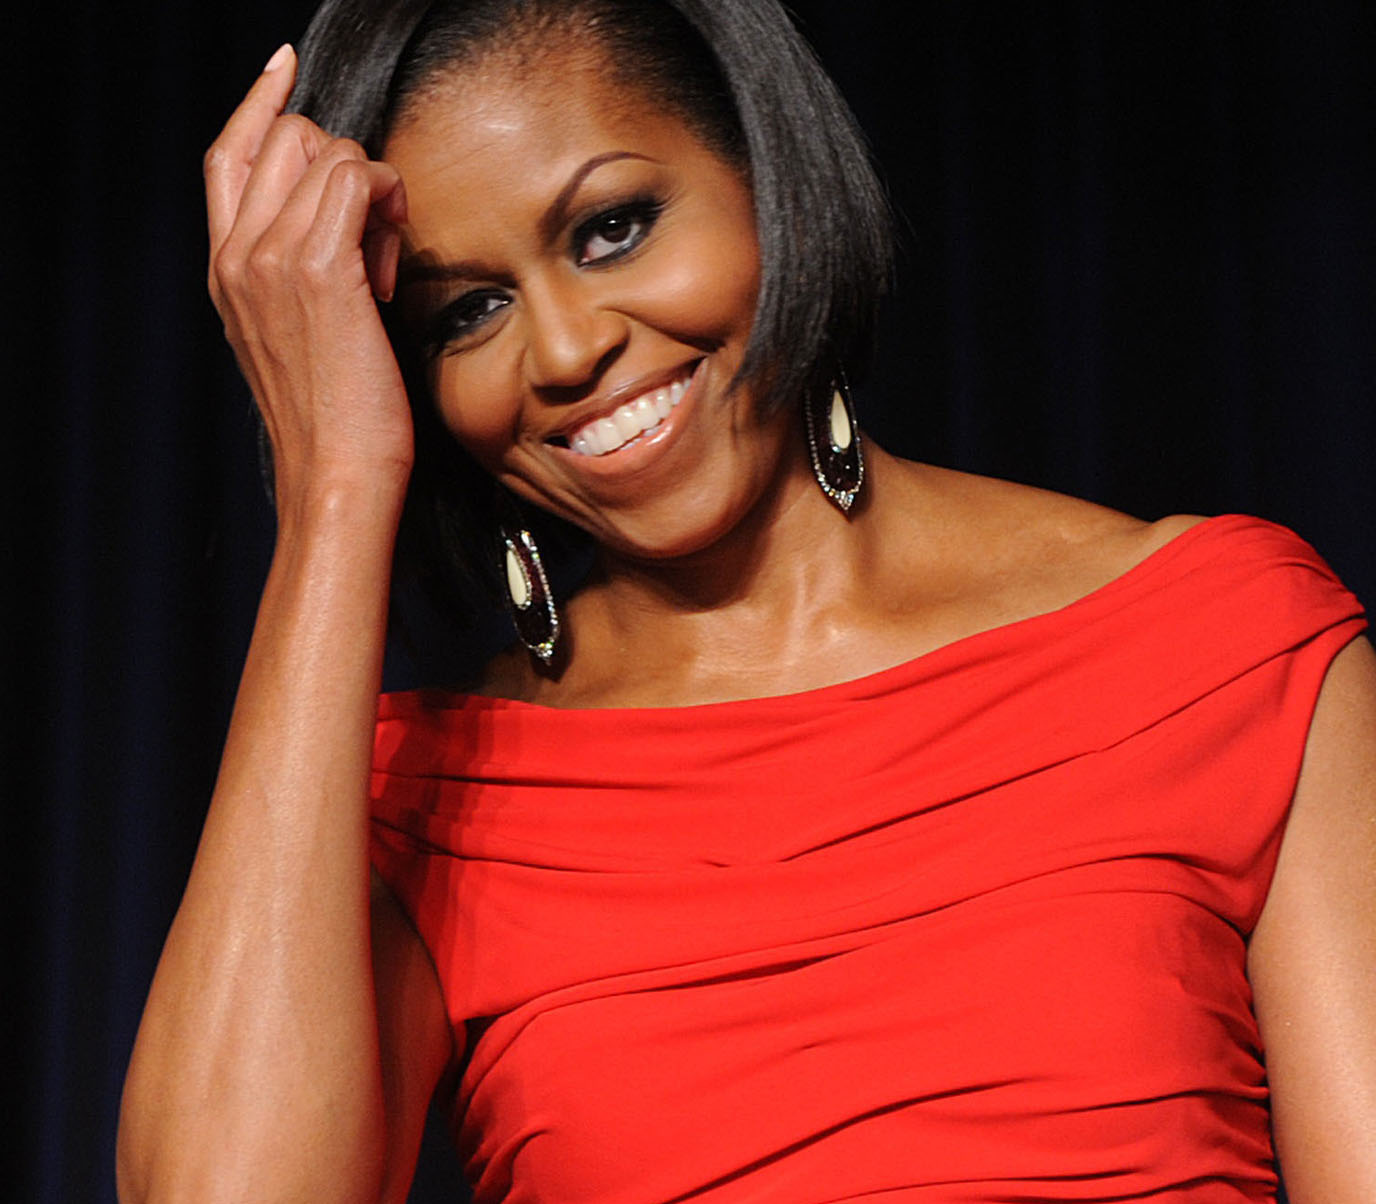 Beautifull Michelle Obama HD Image Wallpaper Uploaded